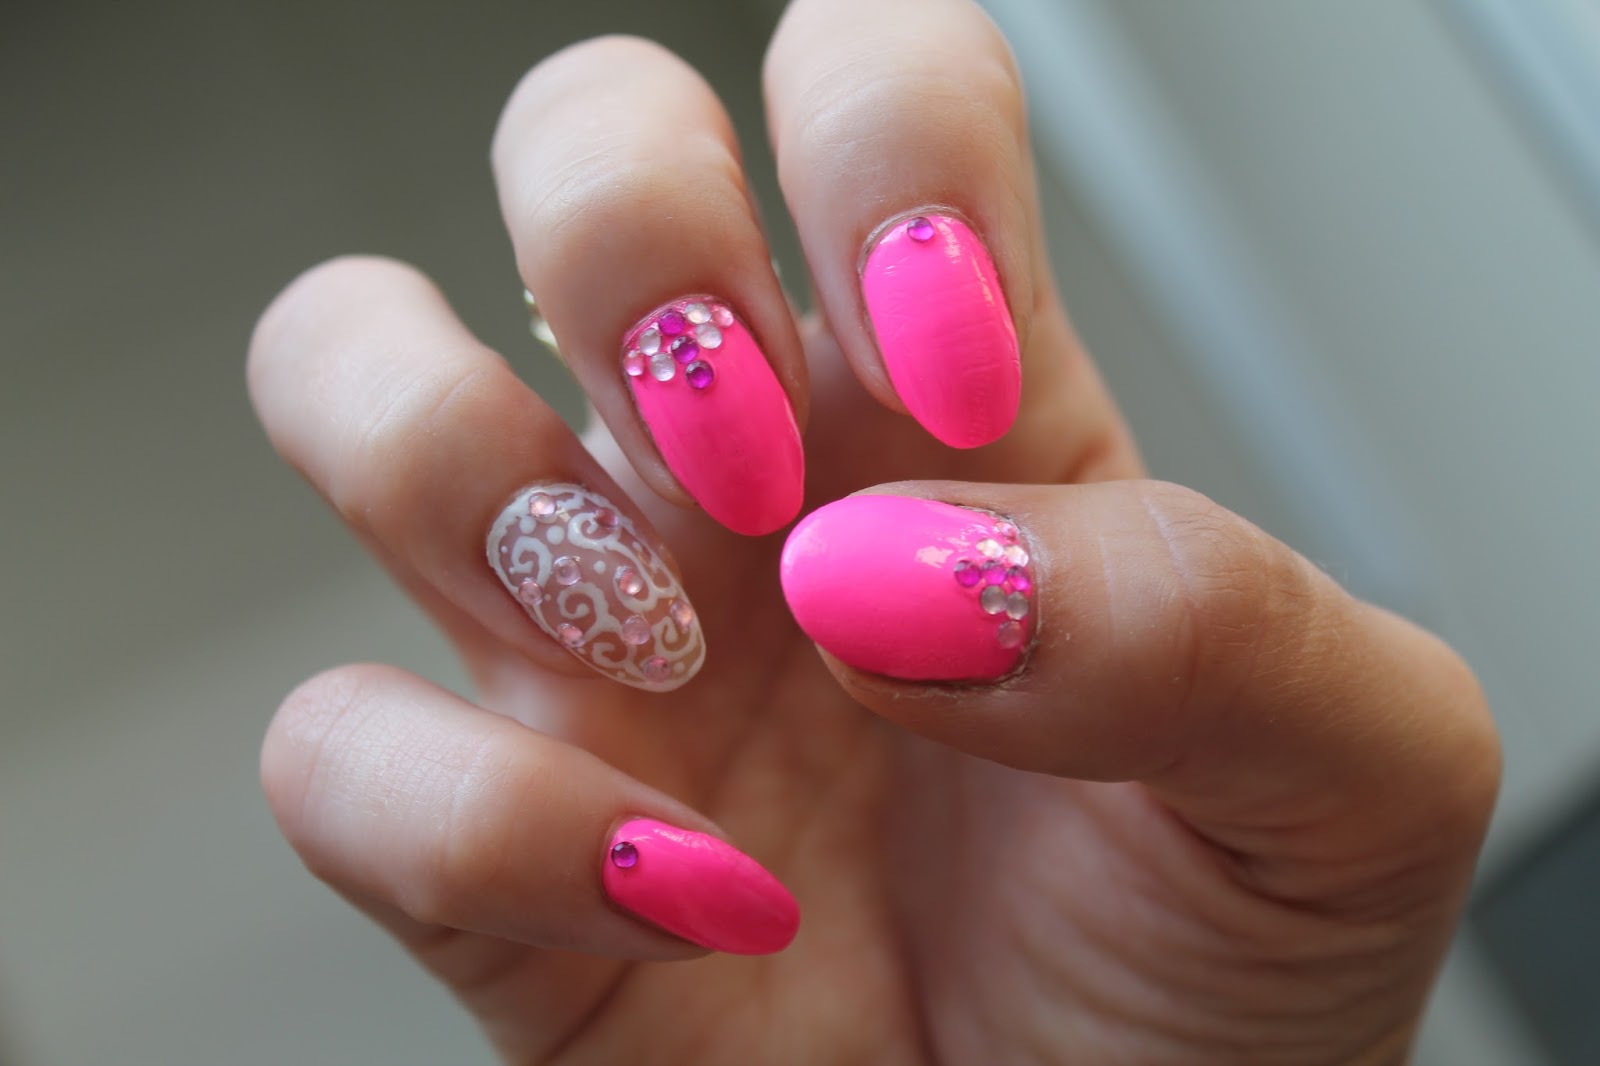 2. Elegant Pink Lace Nail Art - wide 3